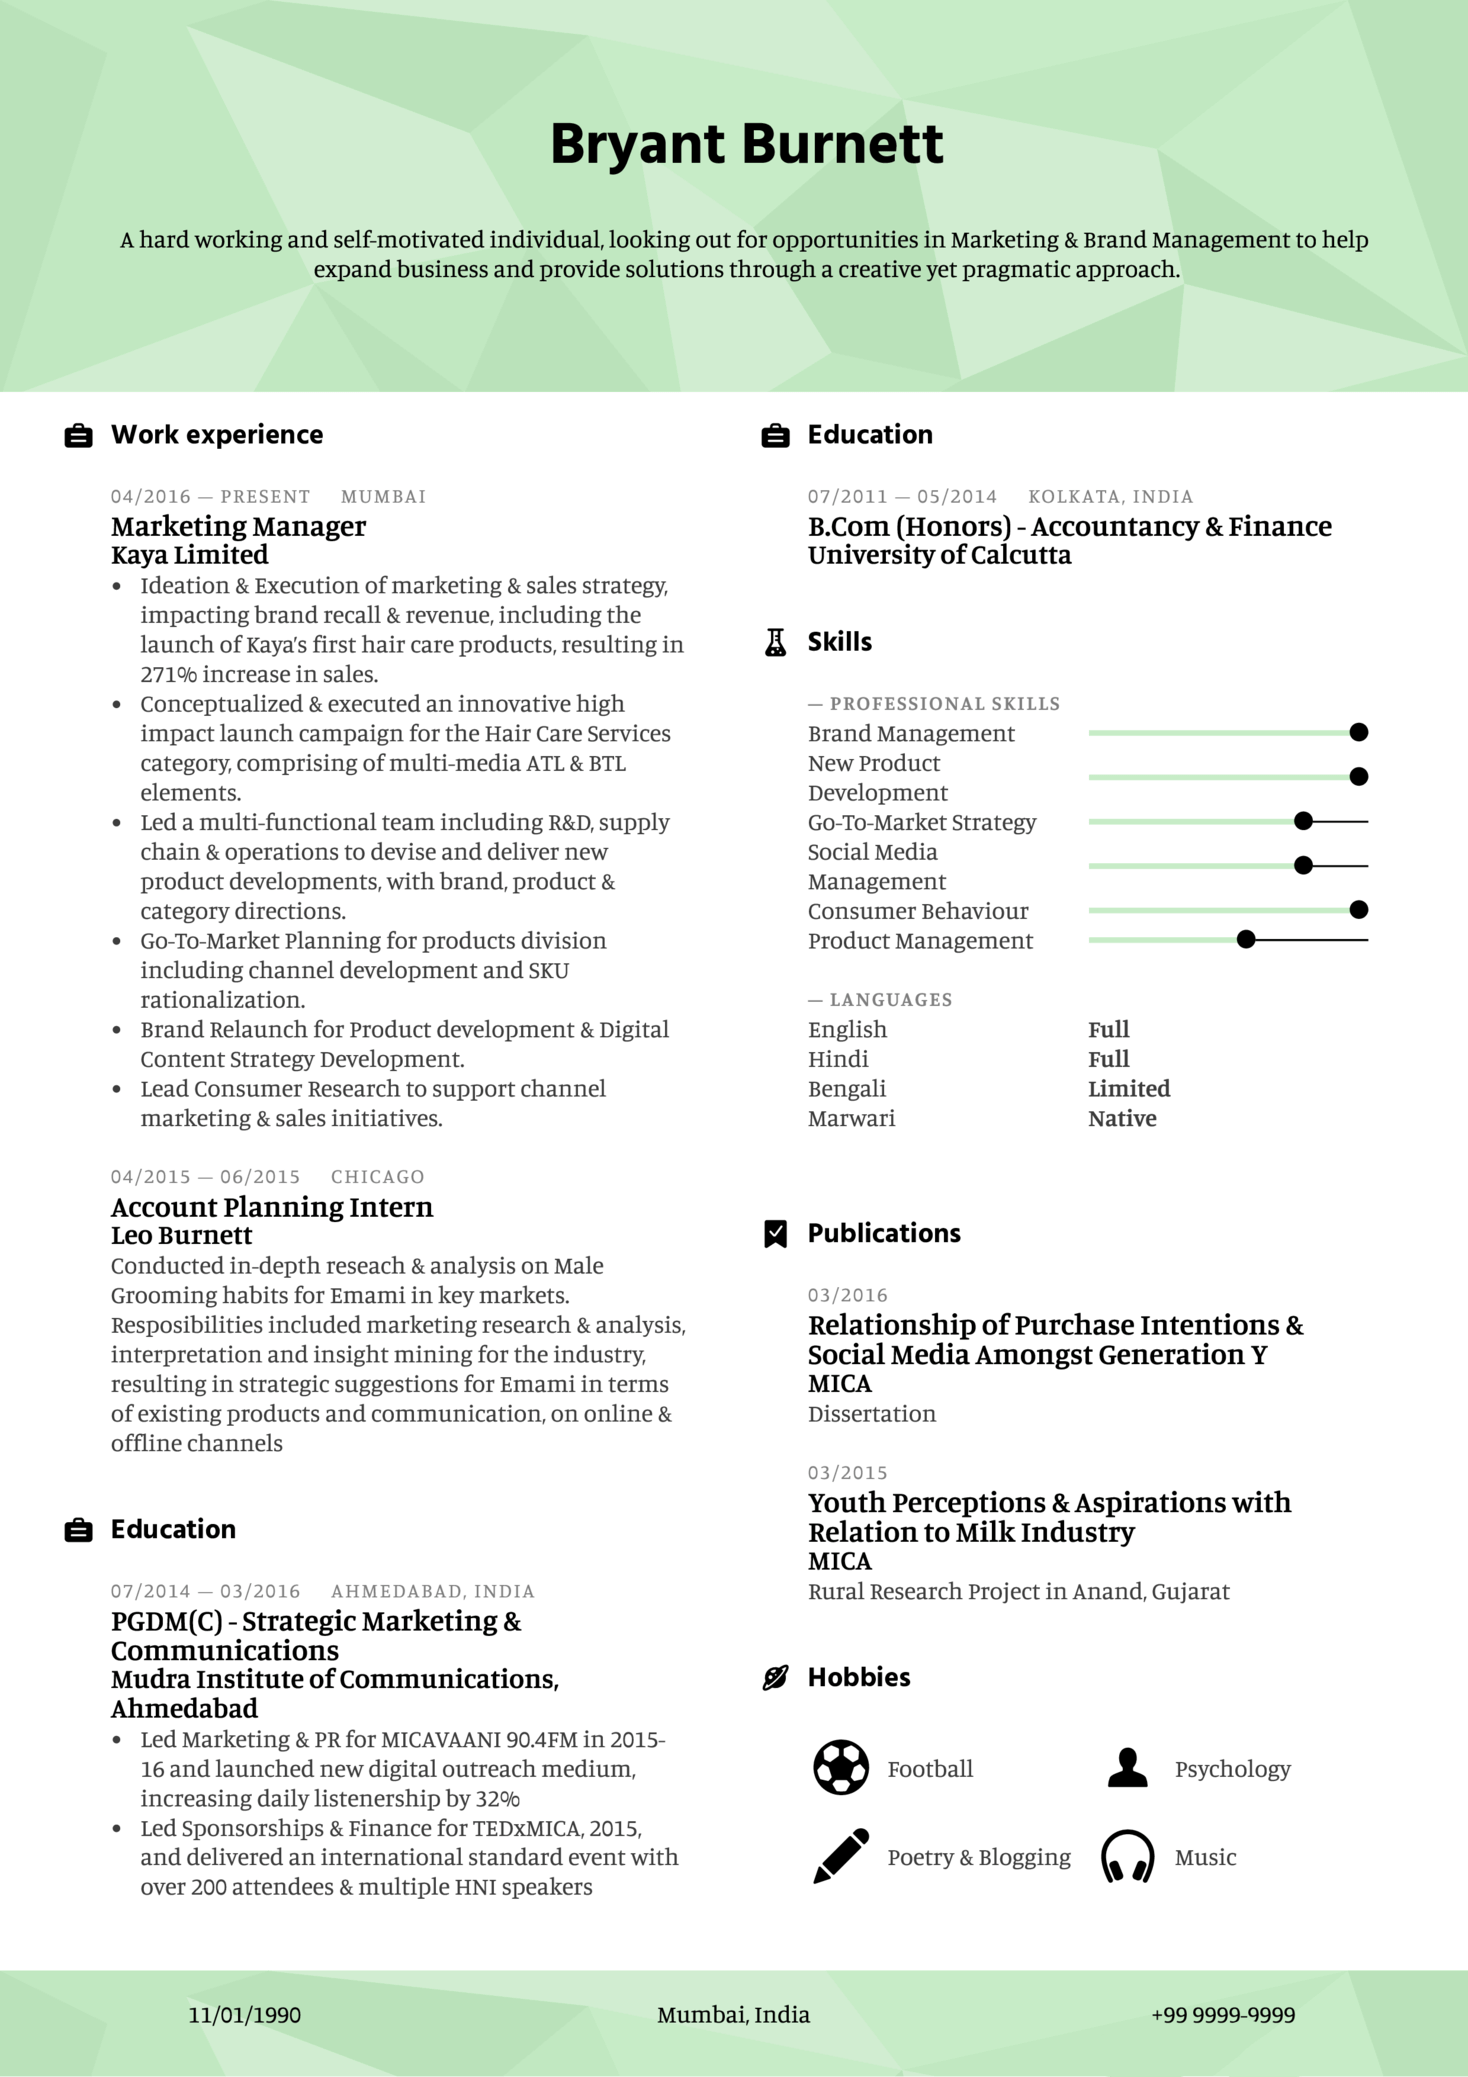 help on resume writing